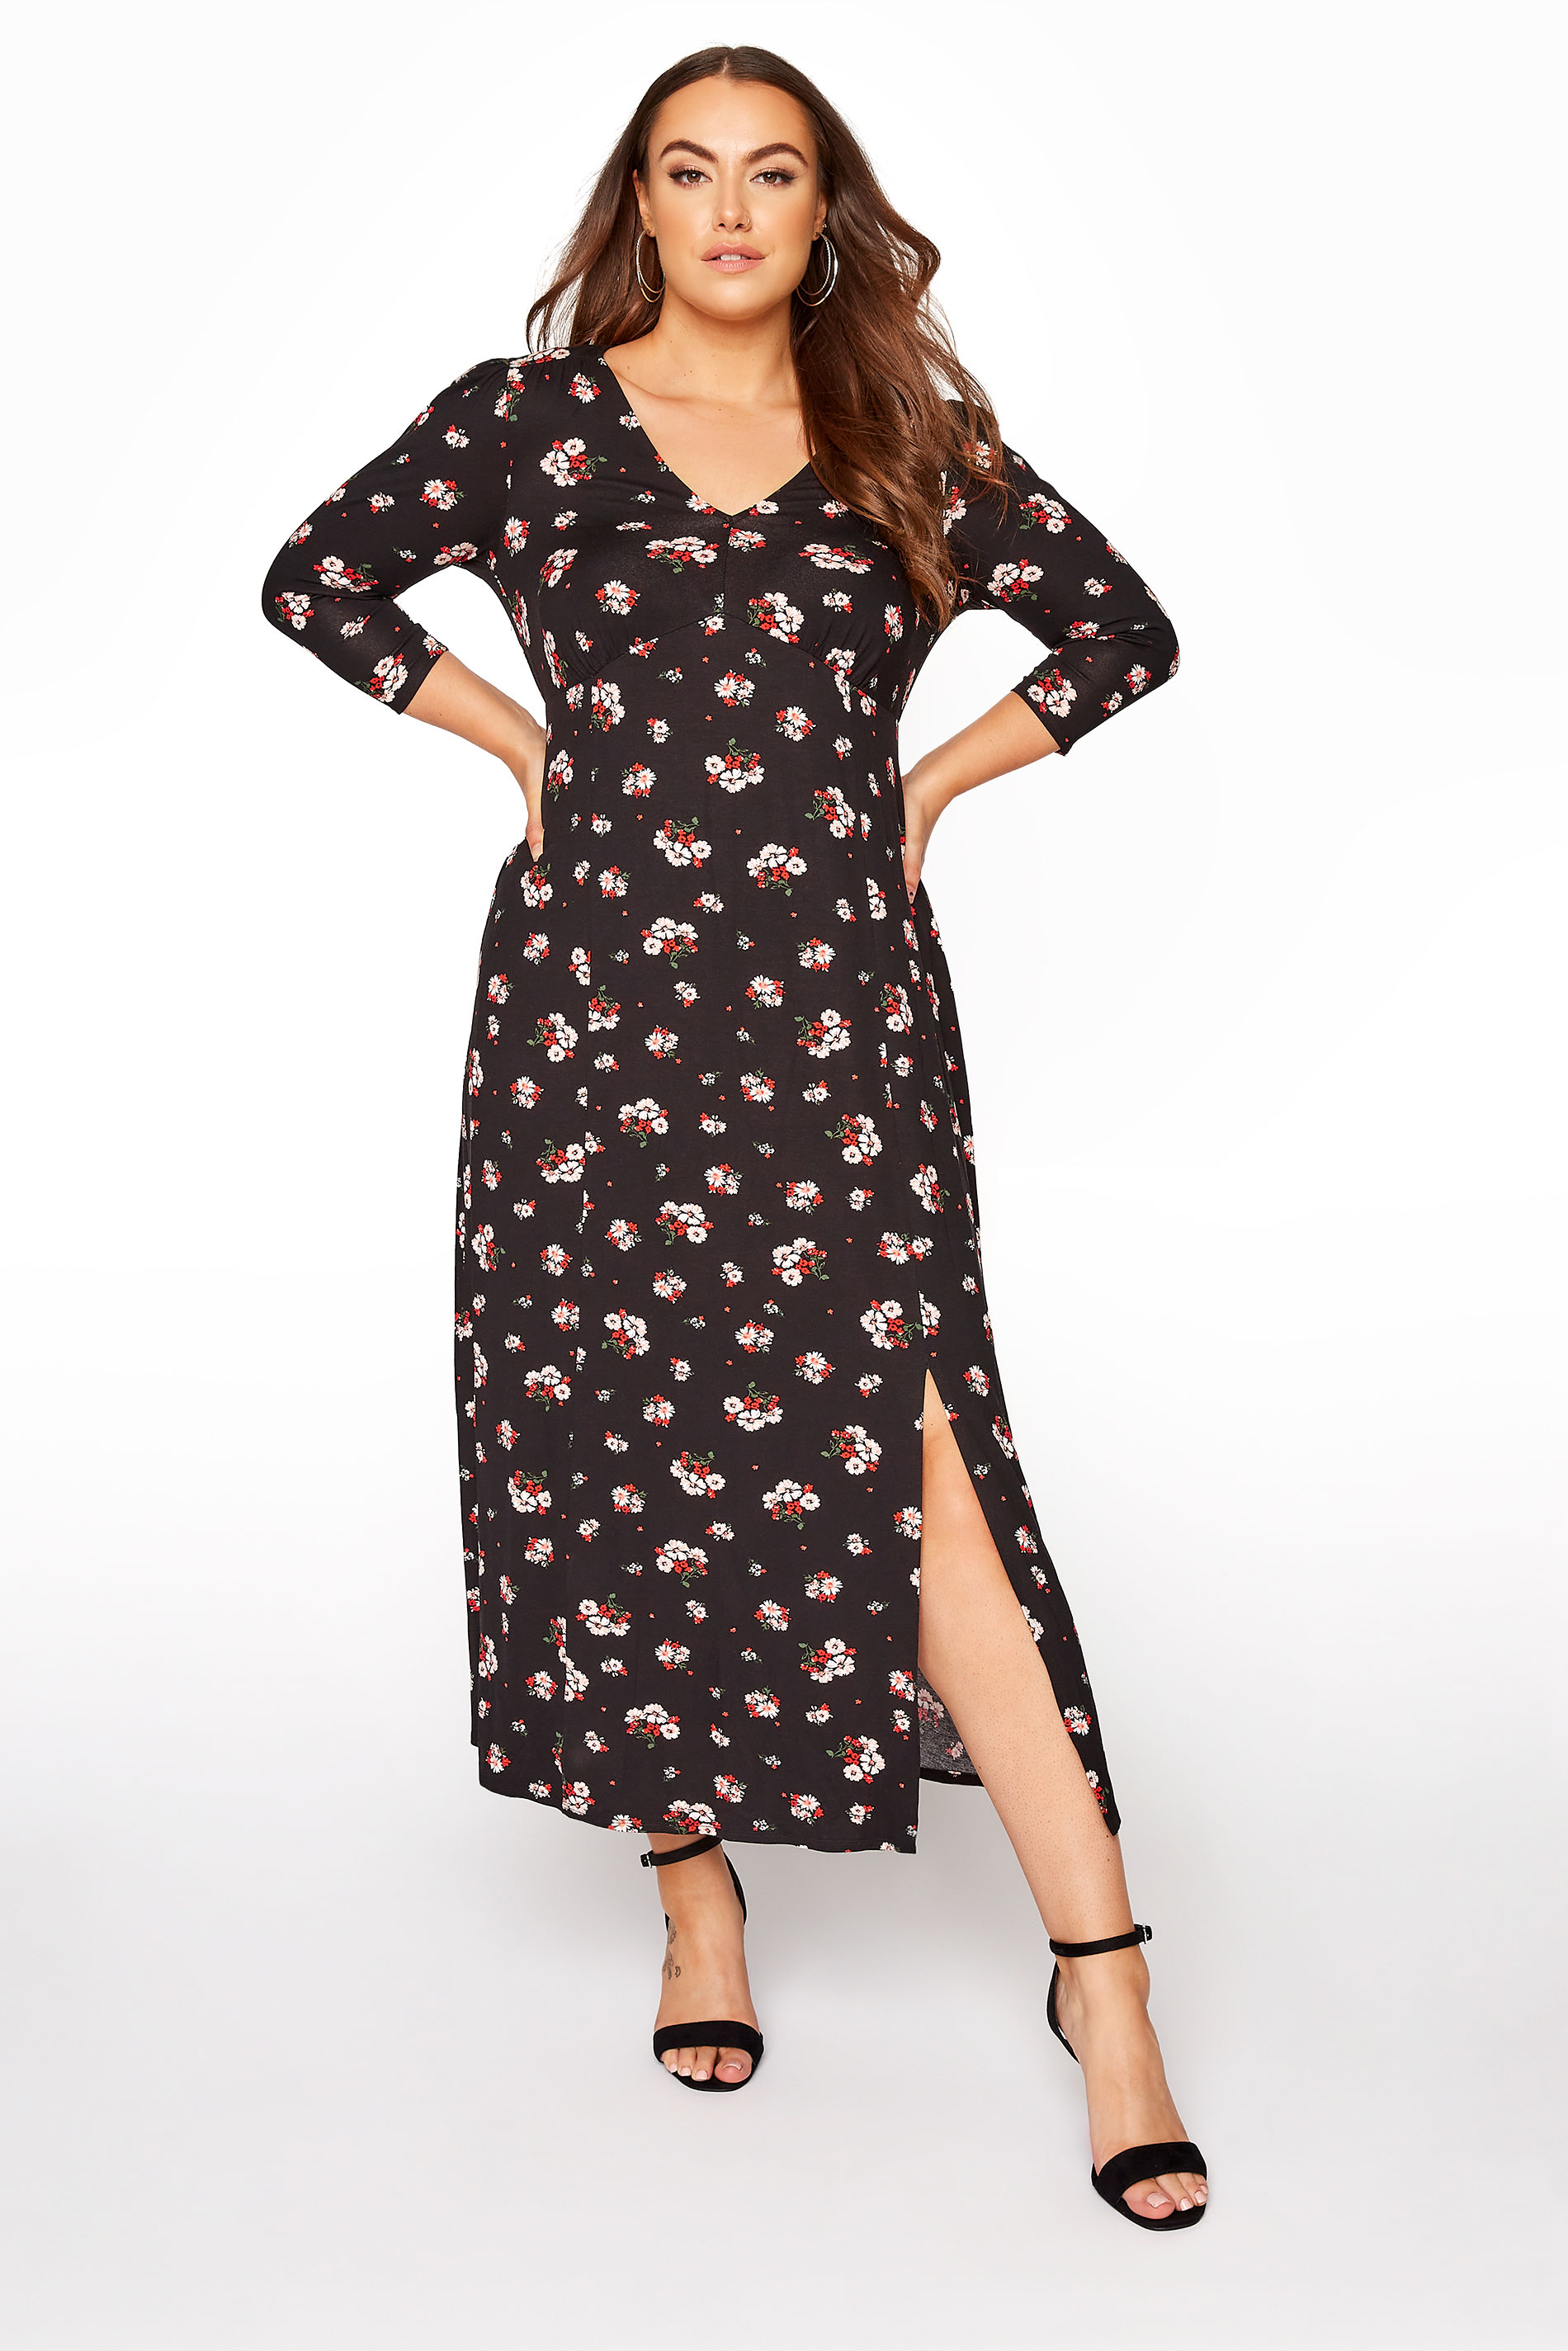 Plus Size YOURS LONDON Black Floral Side Split Maxi Dress | Yours Clothing